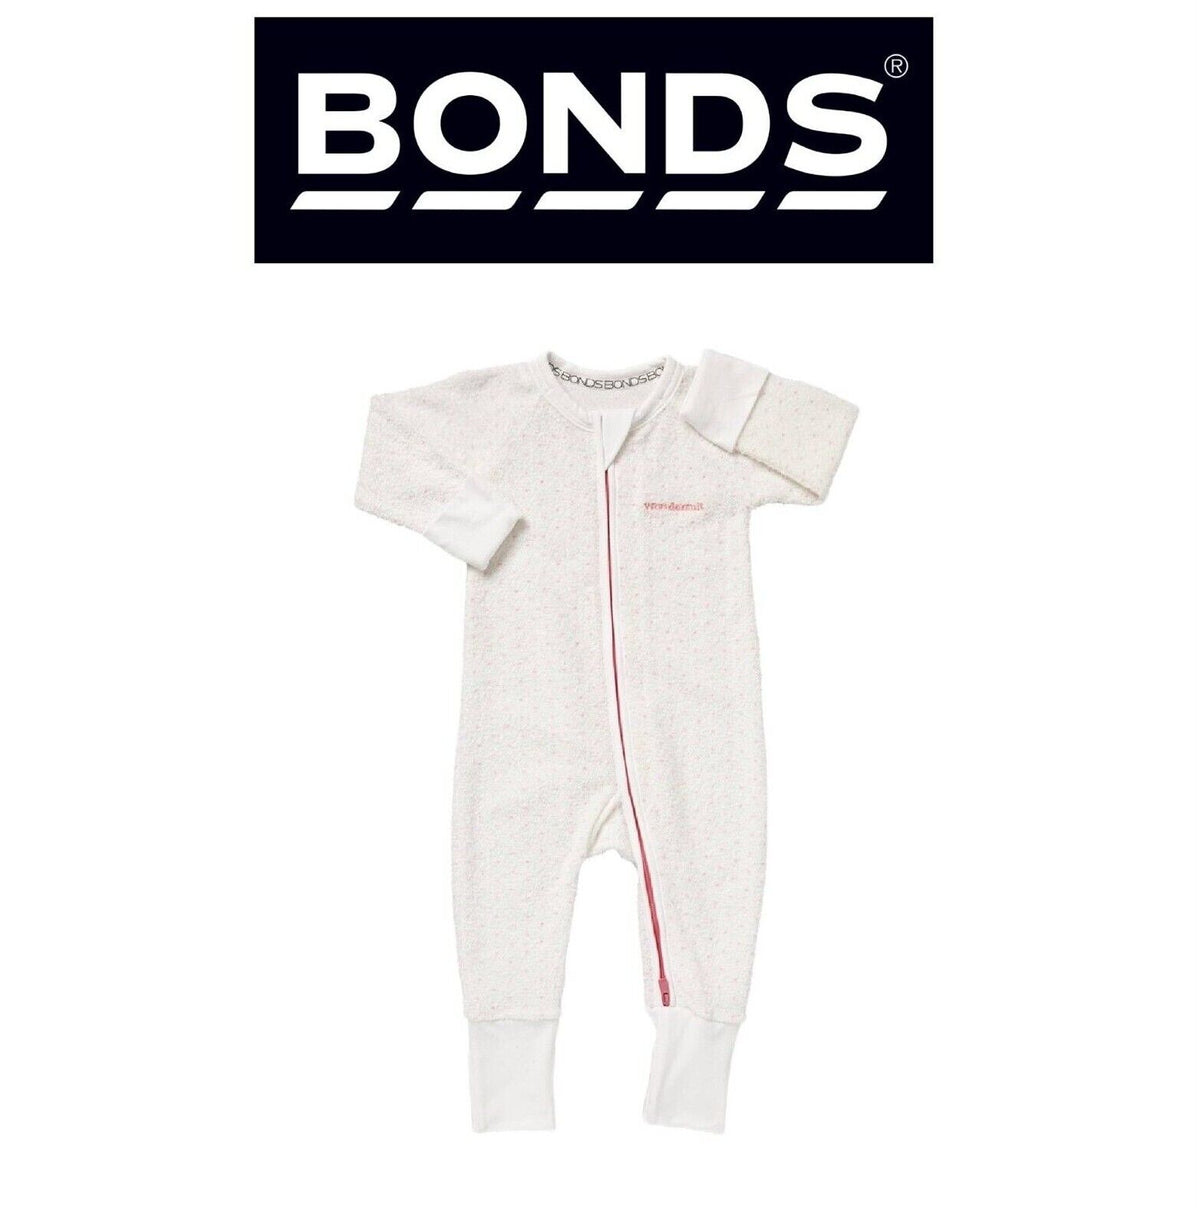 Bonds Baby Poodlette Zip Wondersuit Soft Cotton Warmth Terry Fabric BZJSM